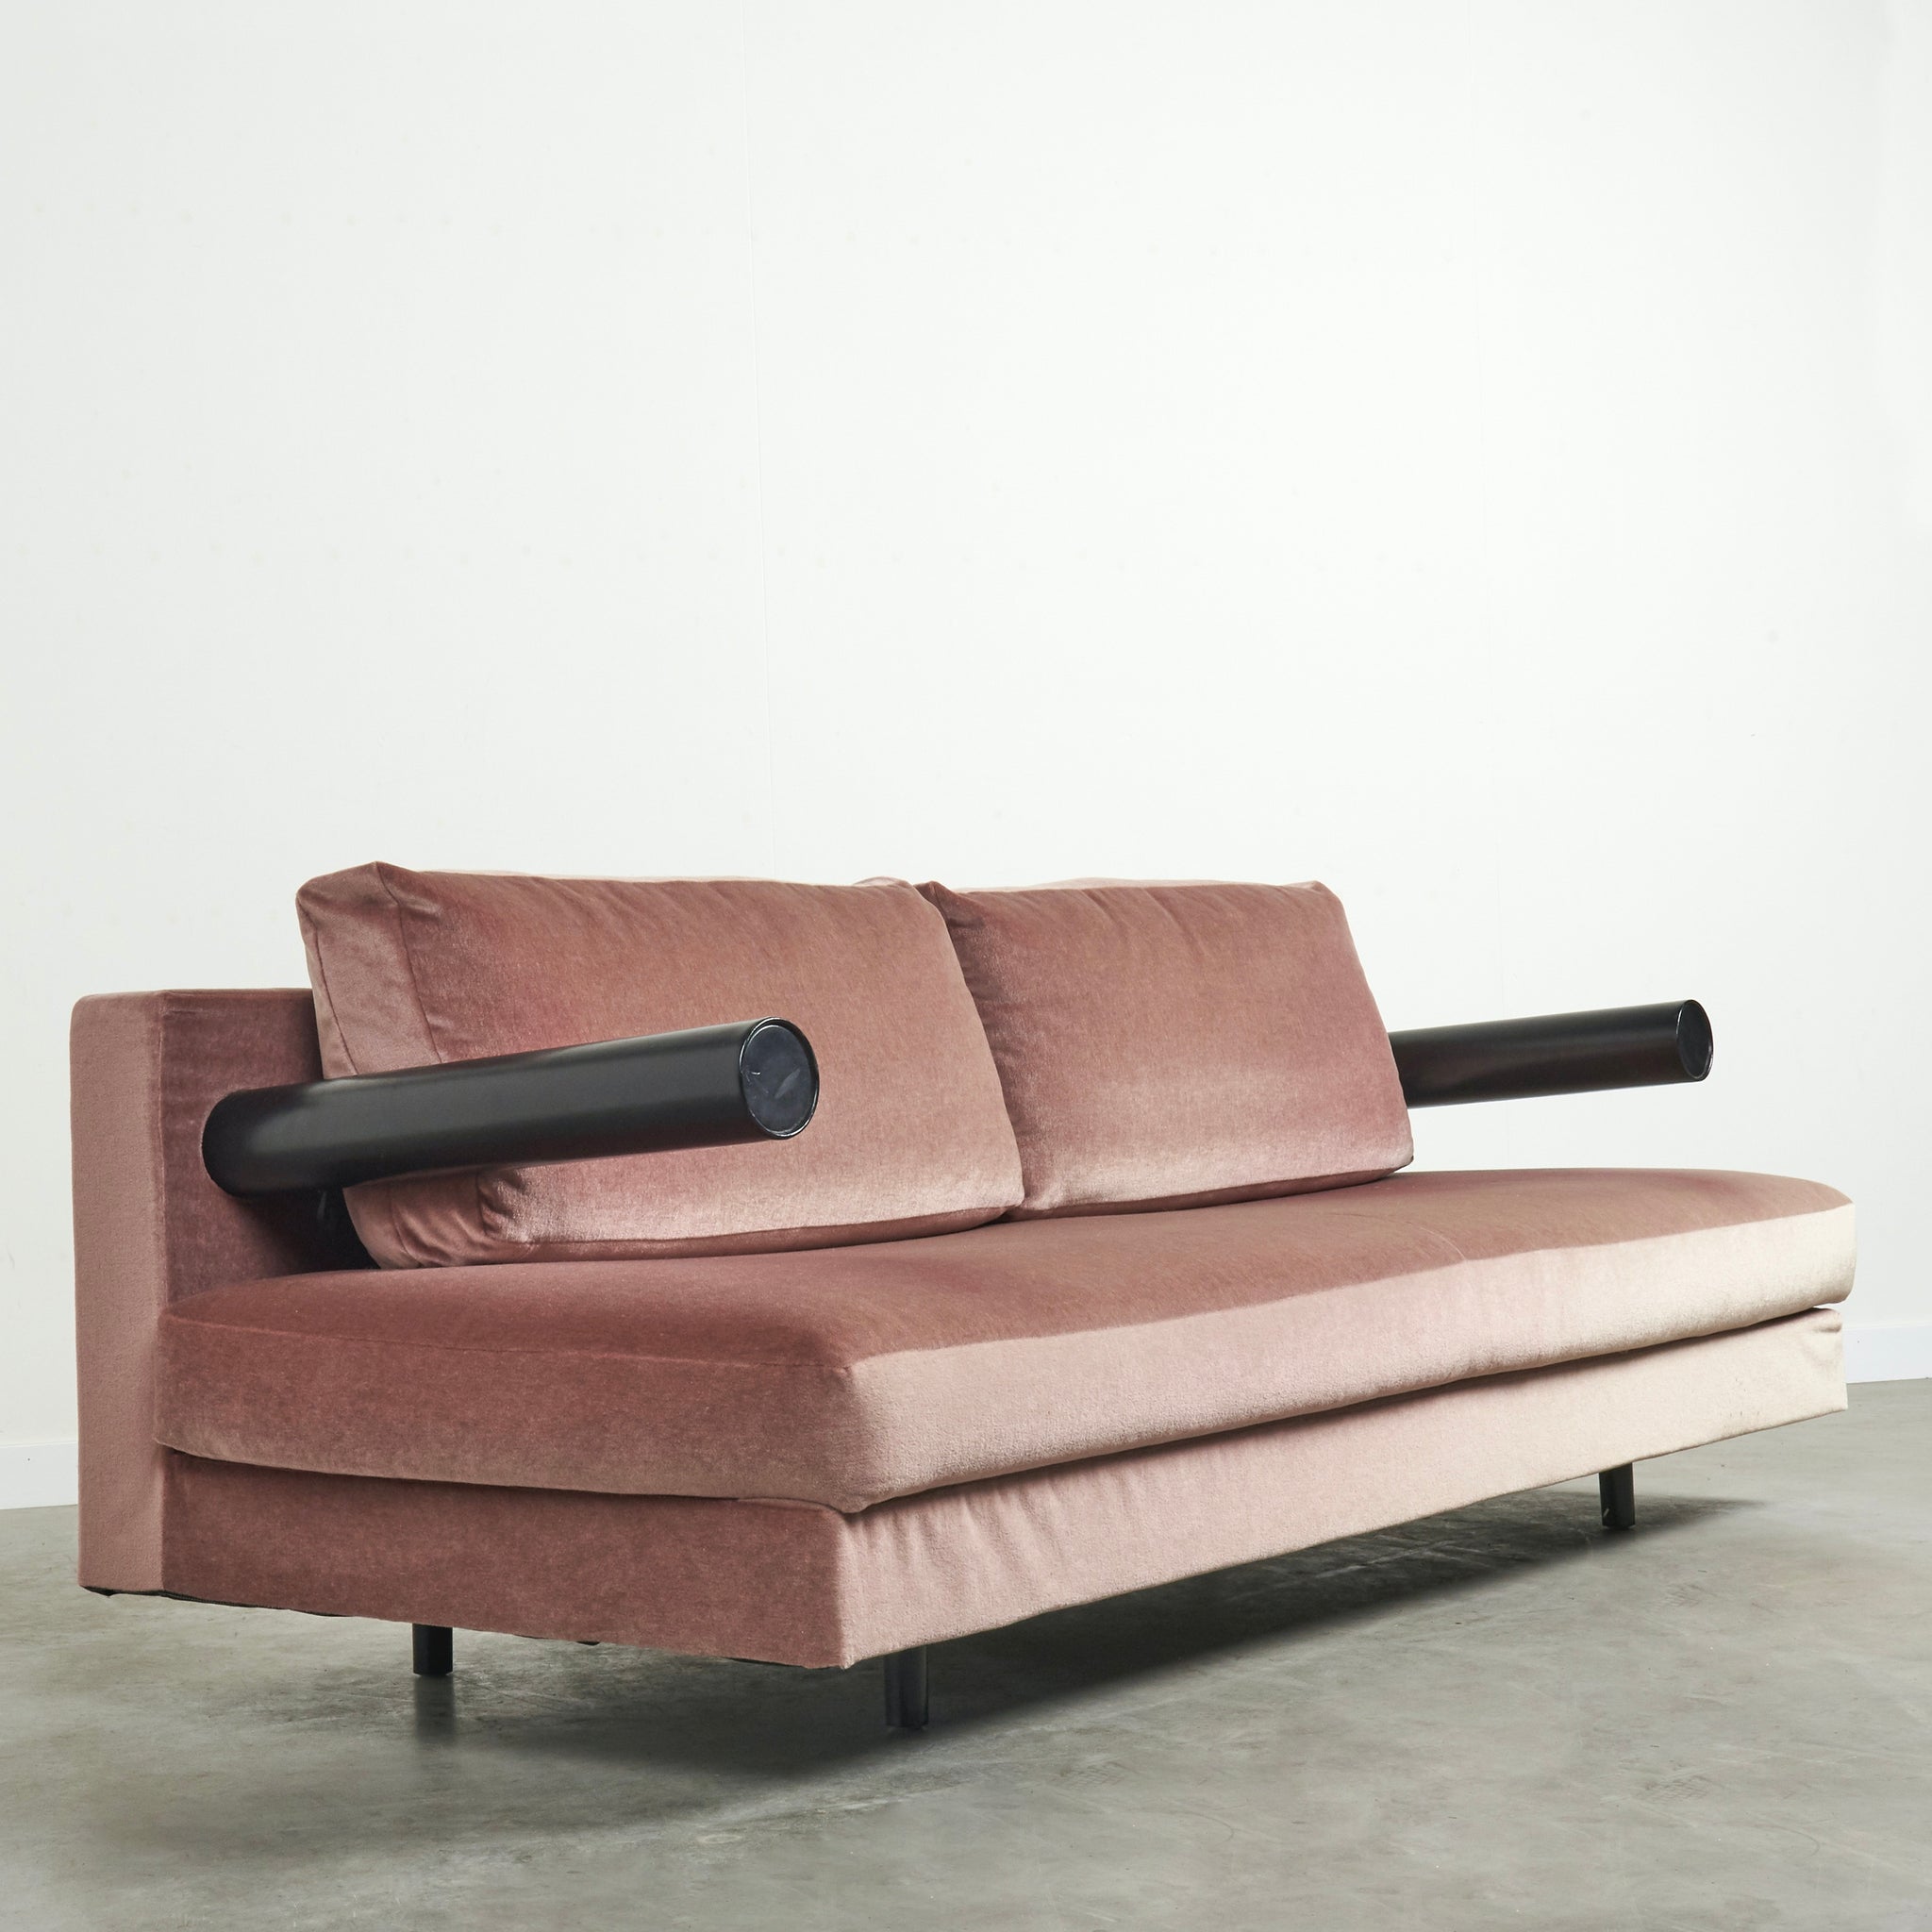 Sity sofa by Antonio Citterio for B&B Italia, 1980s